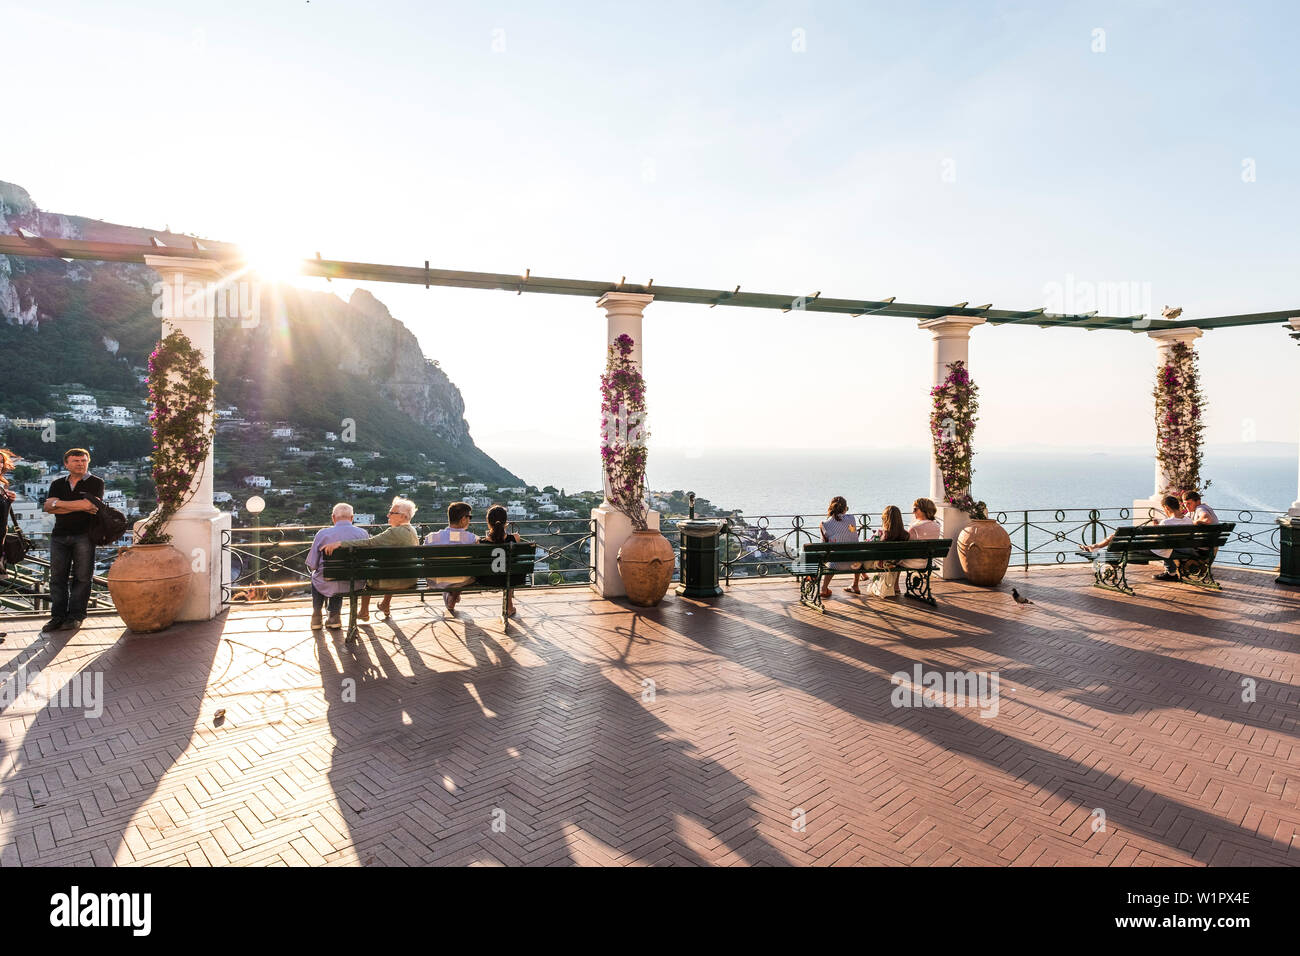 People gazing towards the sunset on the piacetta of Capri, island of Capri, Gulf of Naples, Italy Stock Photo